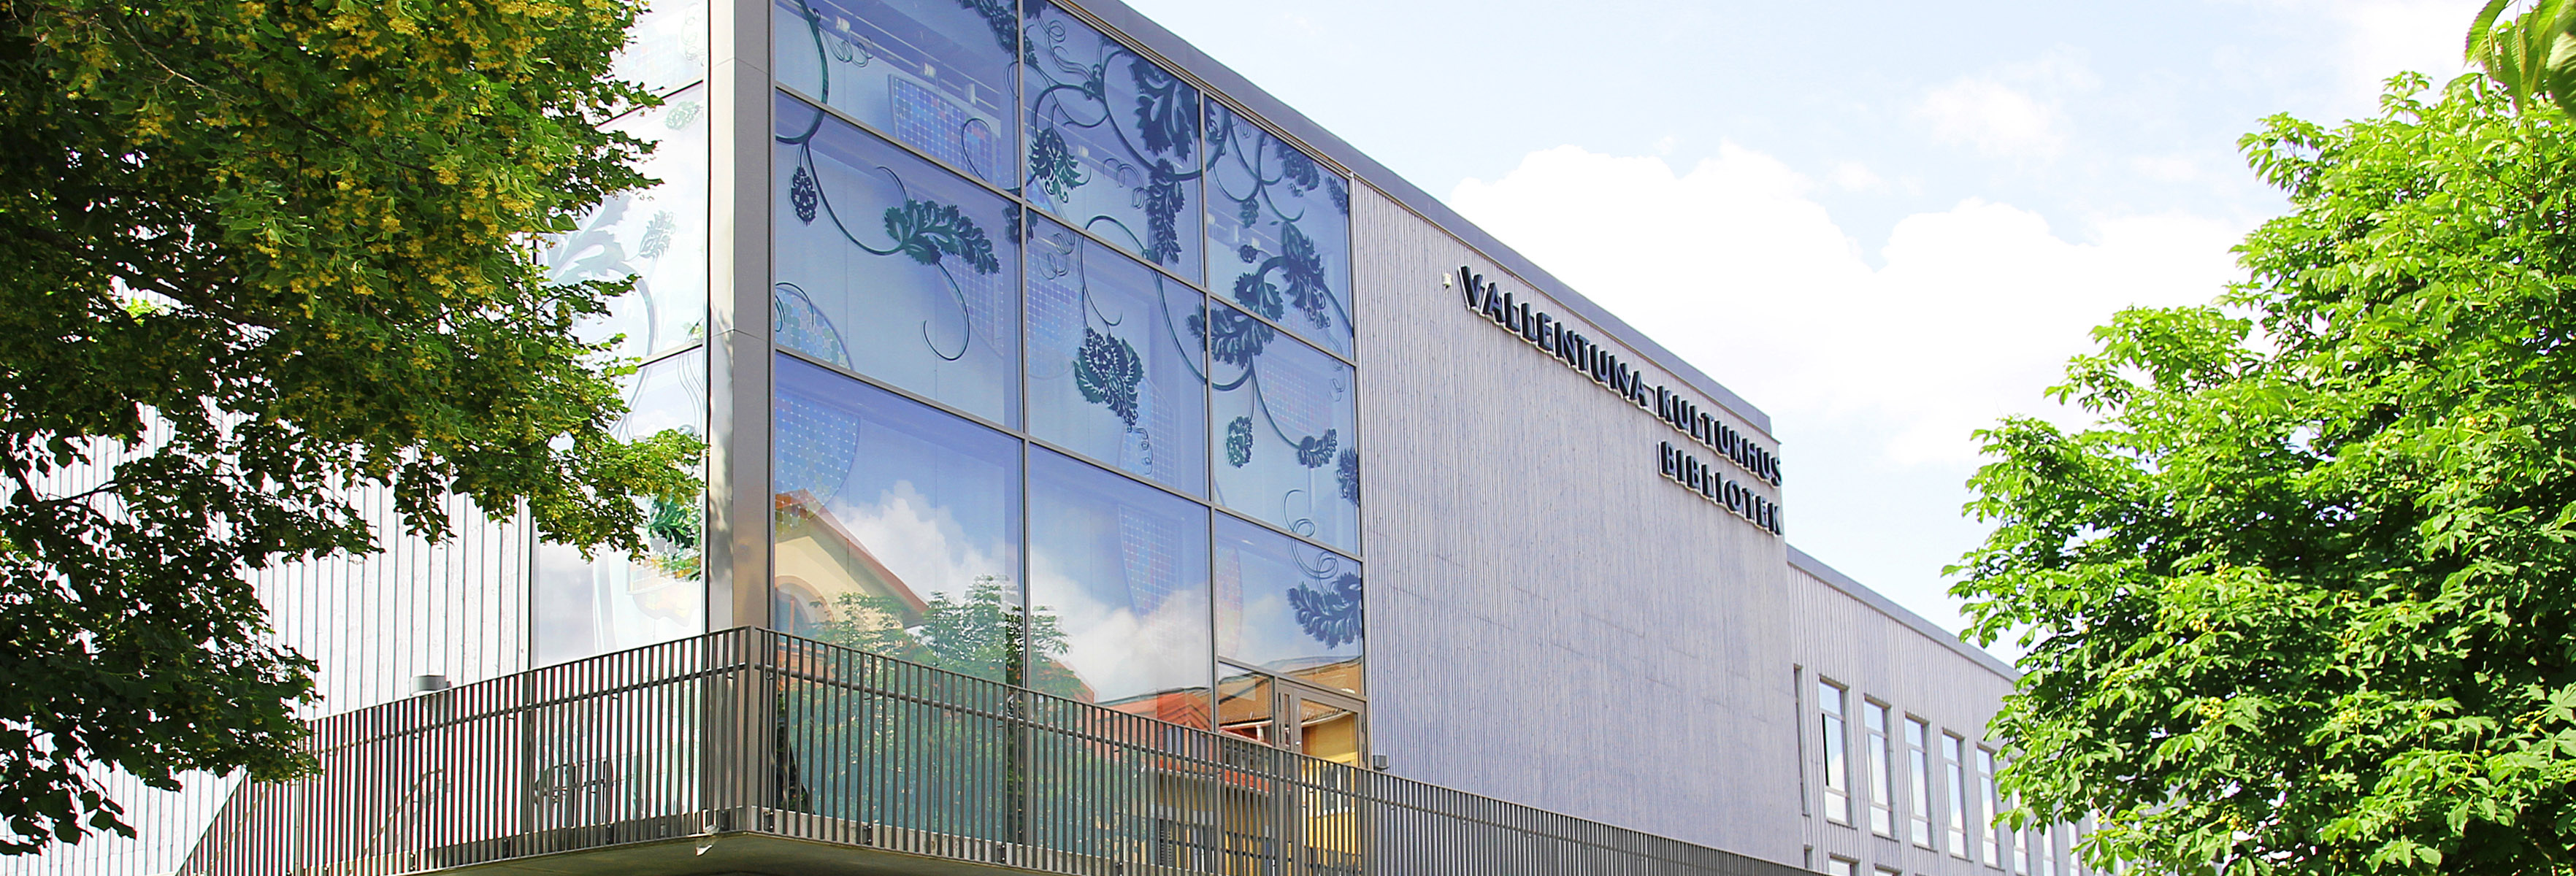 Image of Vallentuna cultural center